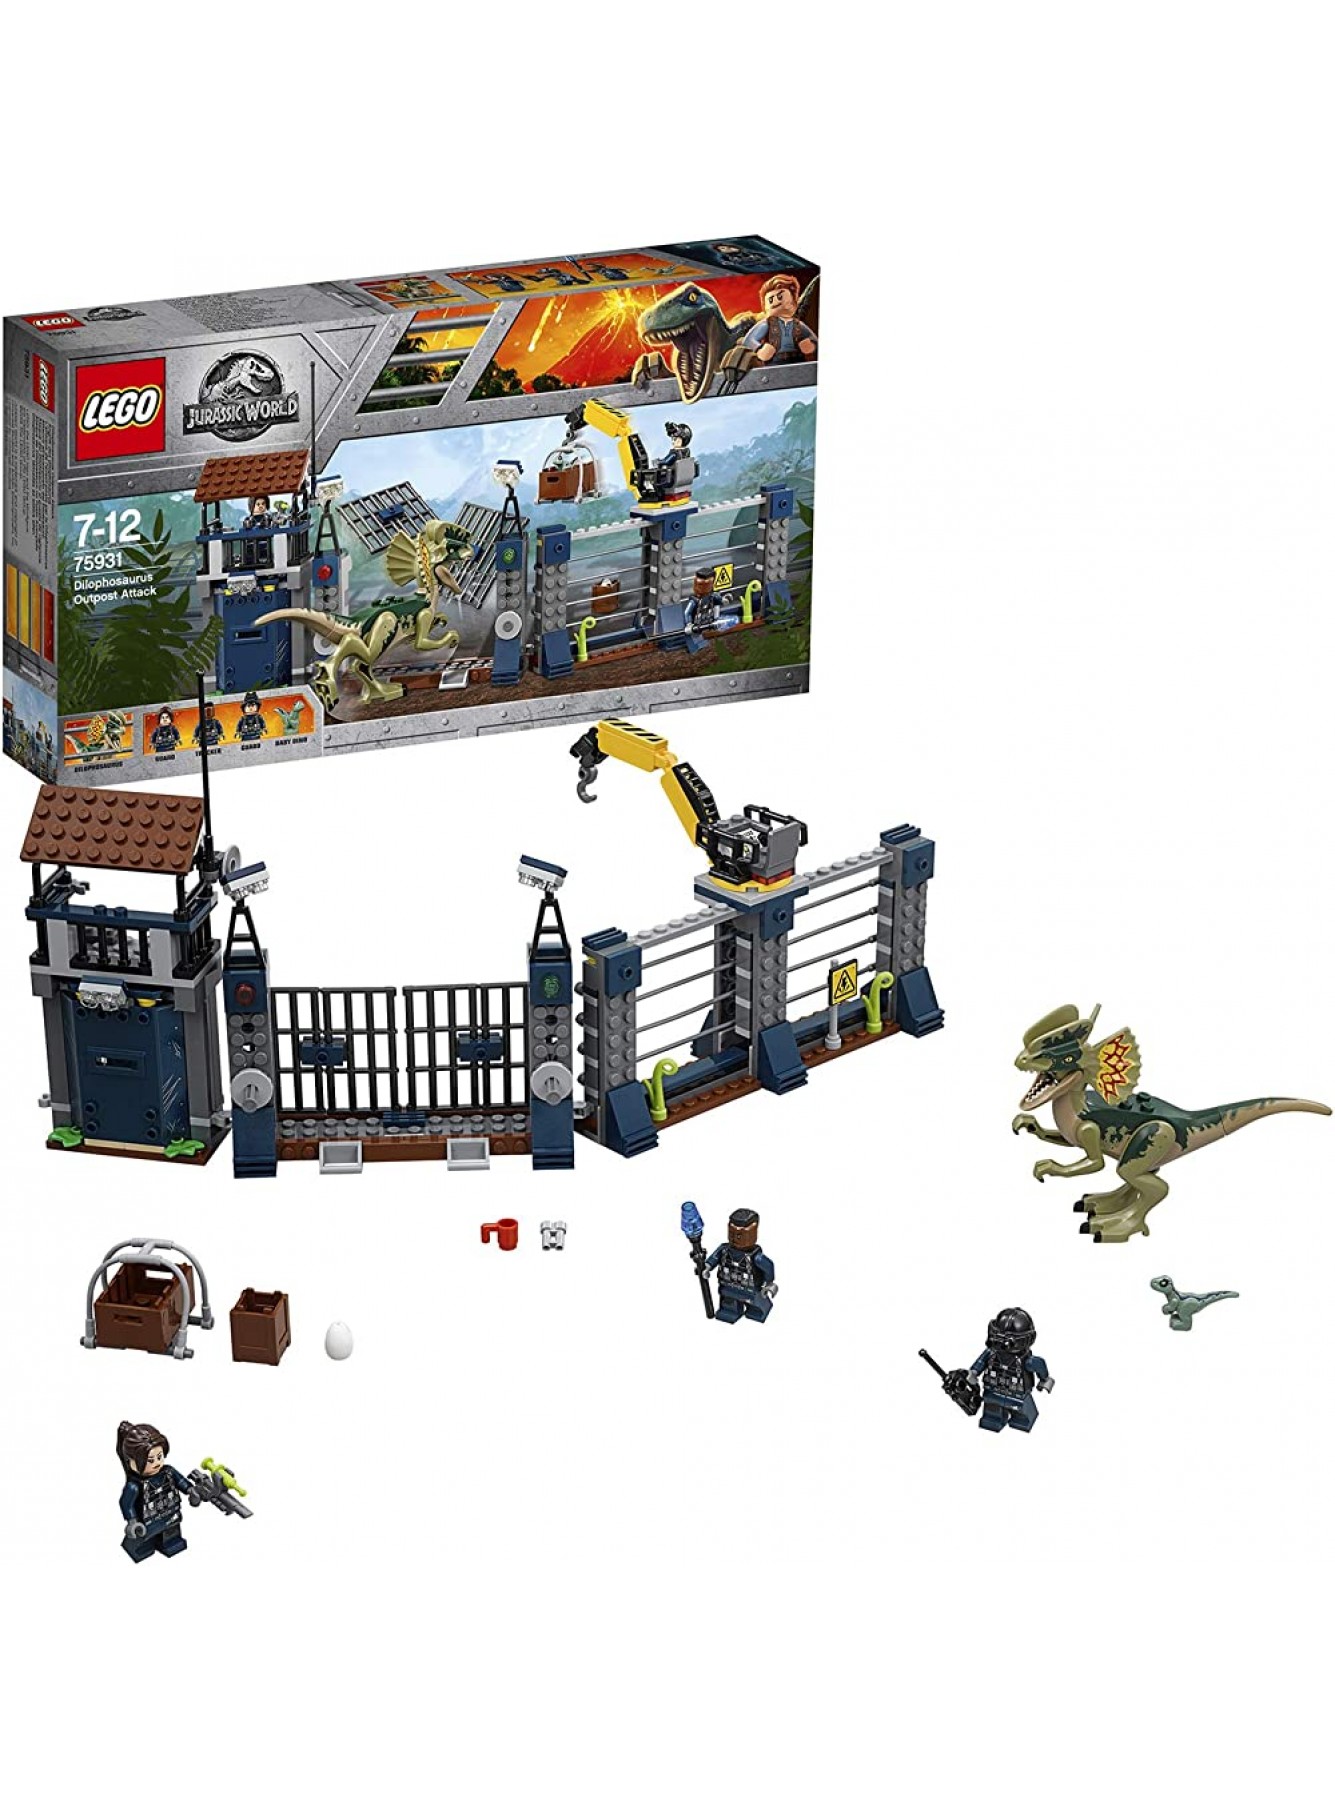 LEGO 75931 Jurassic World Angriff des Dilophosaurus - B078K66KLJ